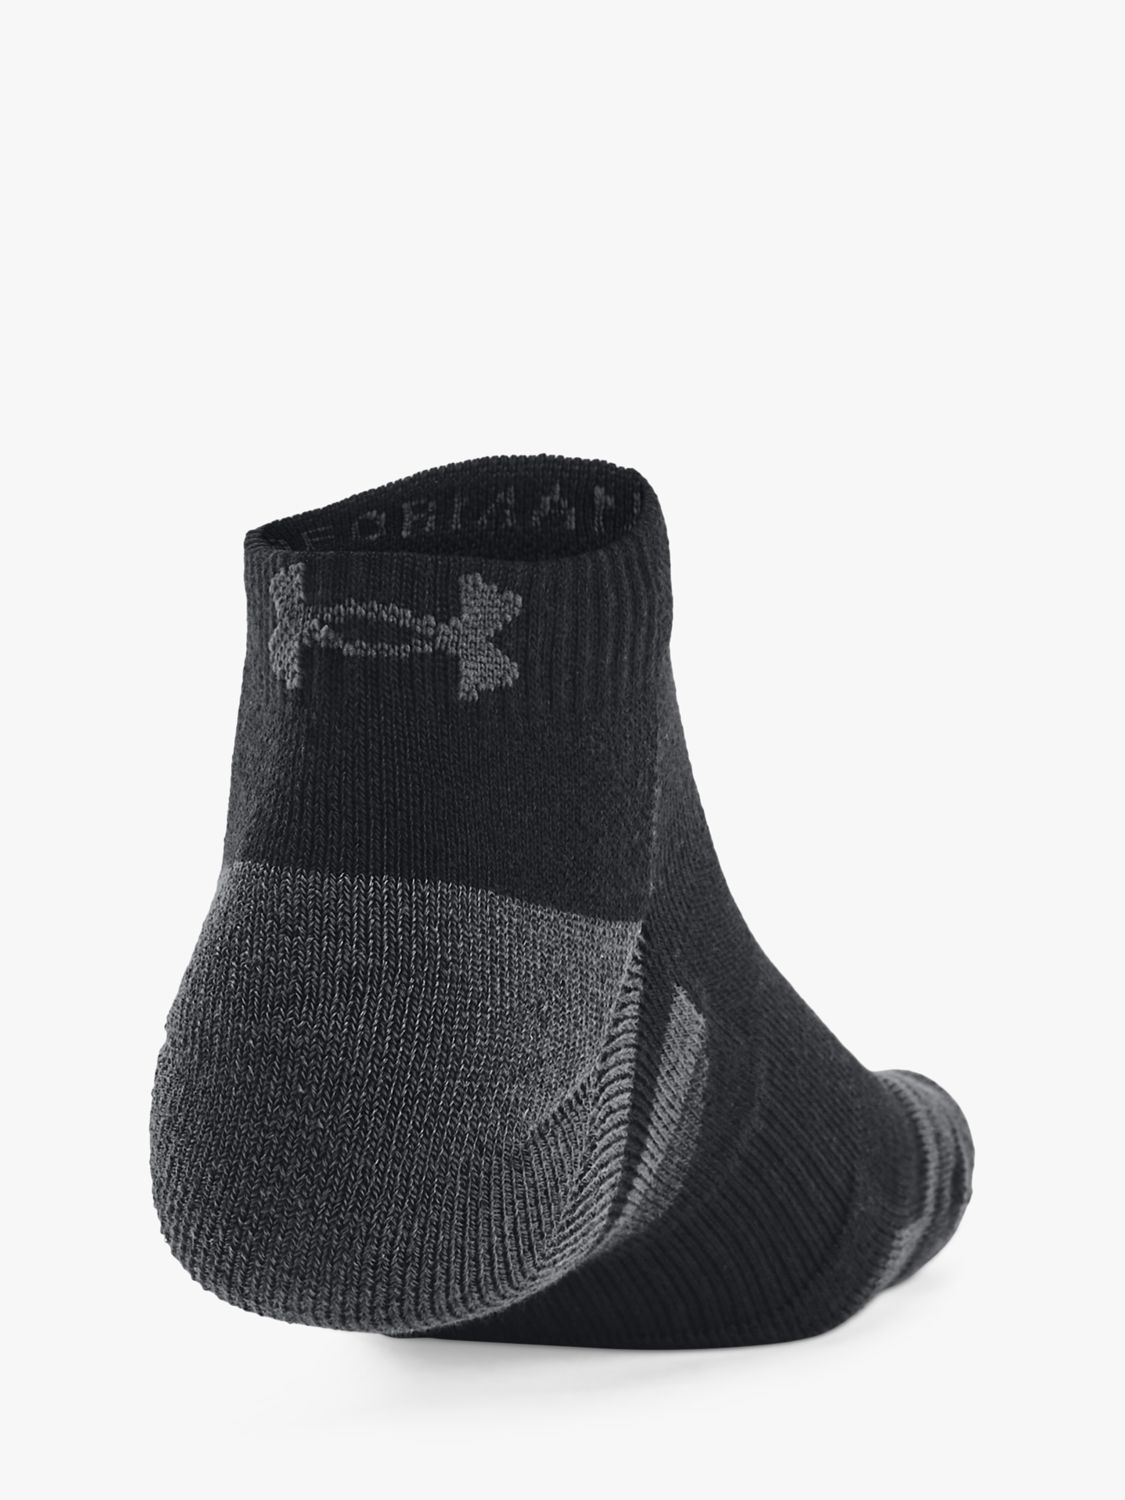 Under Armour Performance Tech Low Cut Socks, Pack of 3, Black/Jet Gray, XL